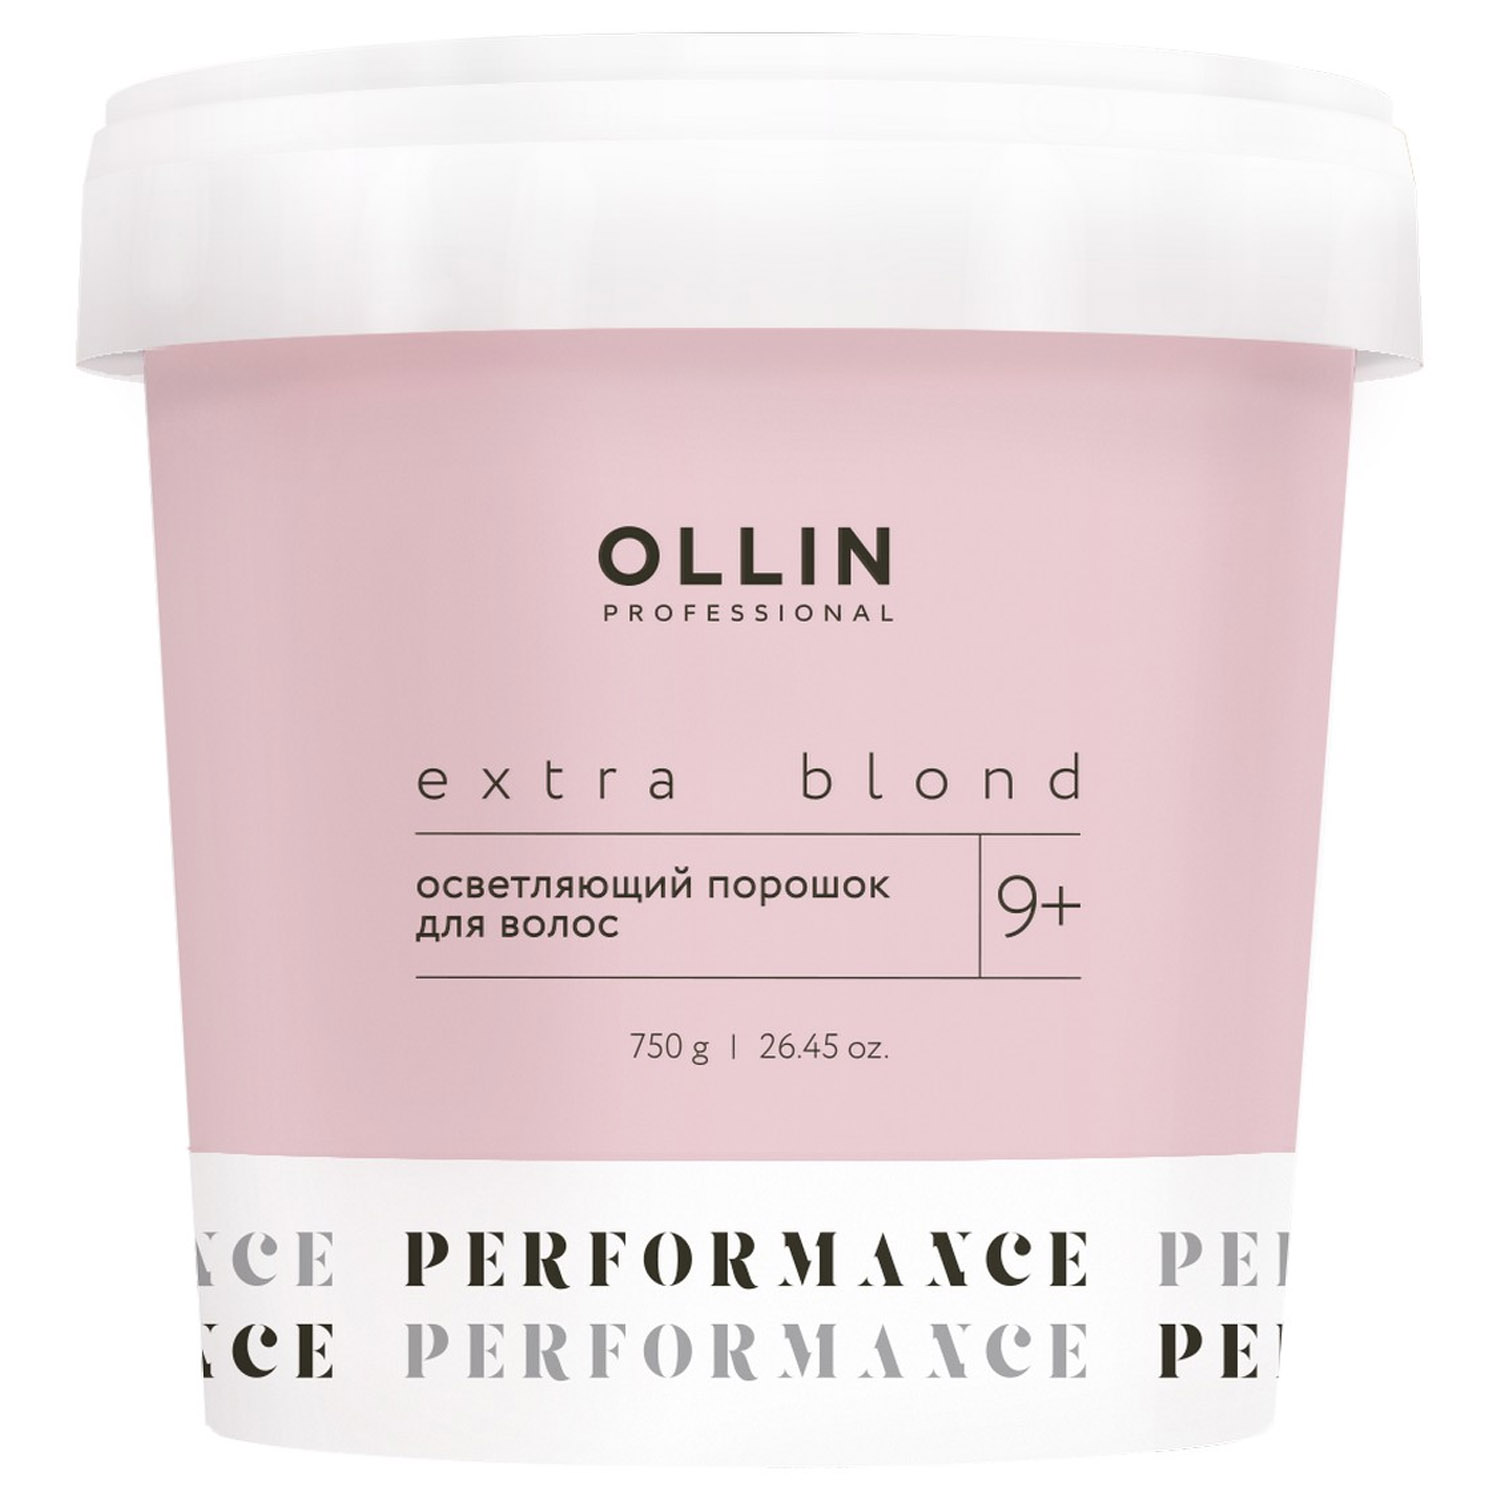 Ollin Professional Осветляющий порошок для волос Extra Blond 9+, 750 г (Ollin Professional, Performance)